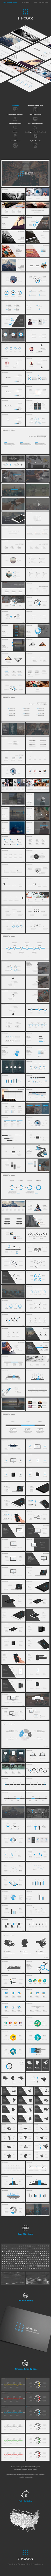 Powerpoint template presentation design Layout business